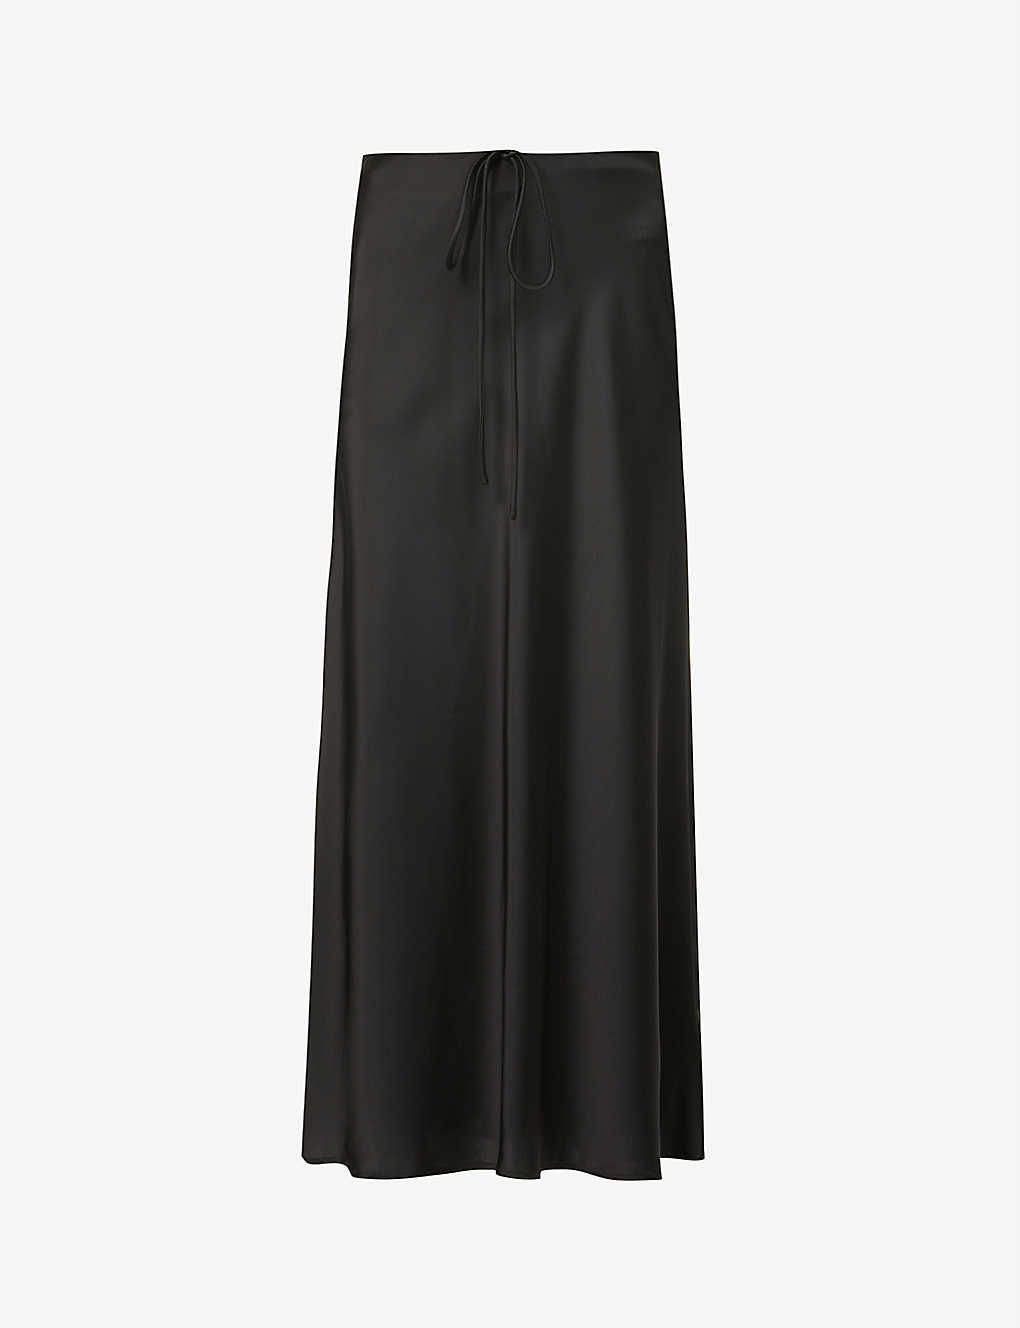 Romane high-waist satin midi skirt | Selfridges